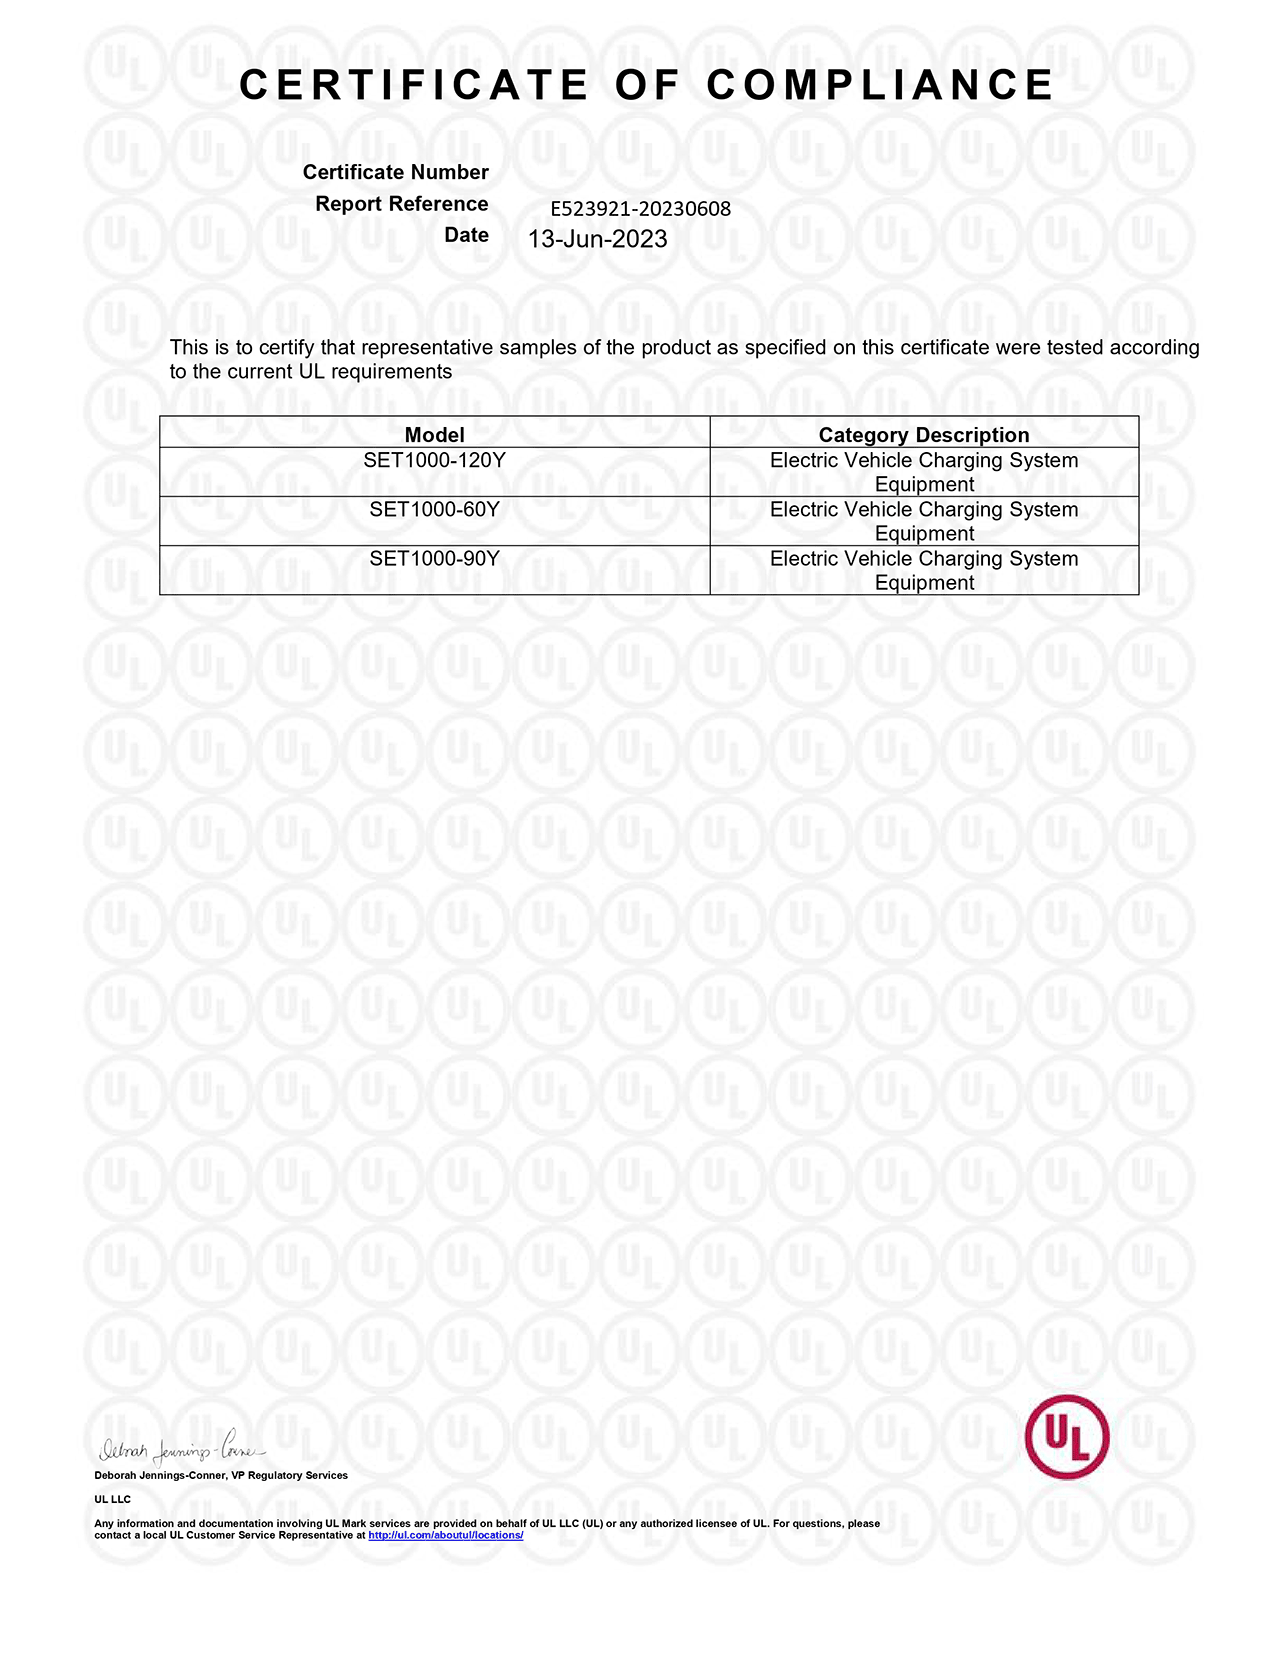 SETEC POWER UL Certificate-2